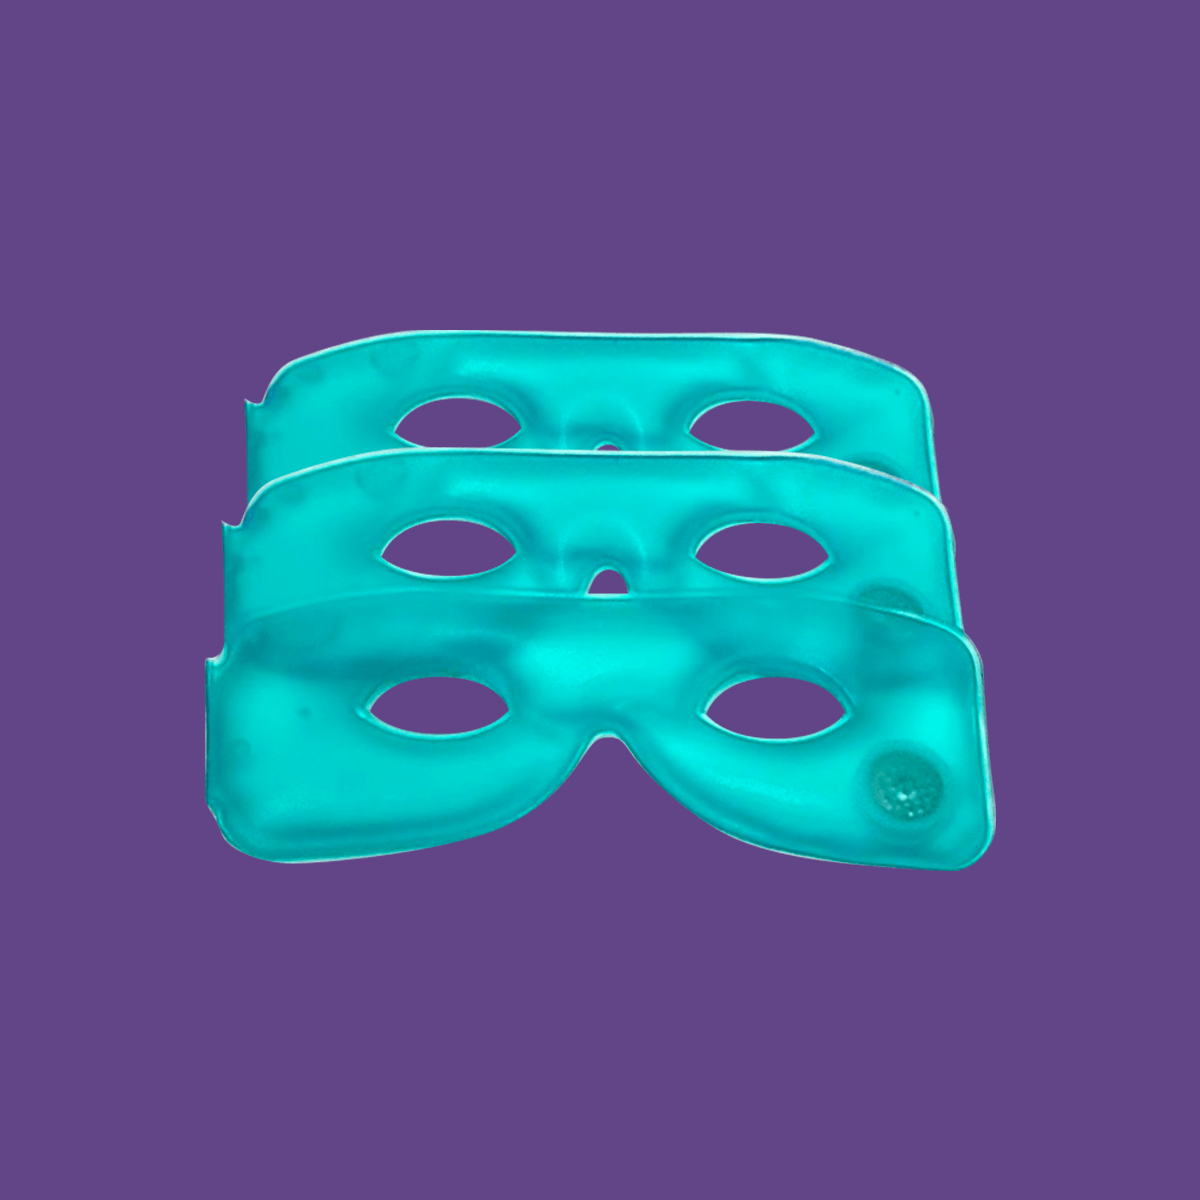 TearRestore Bundle: Mask, 3 Reusable Heat Packs, Collapsible Reactivation Kettle - DryEye Rescue Store